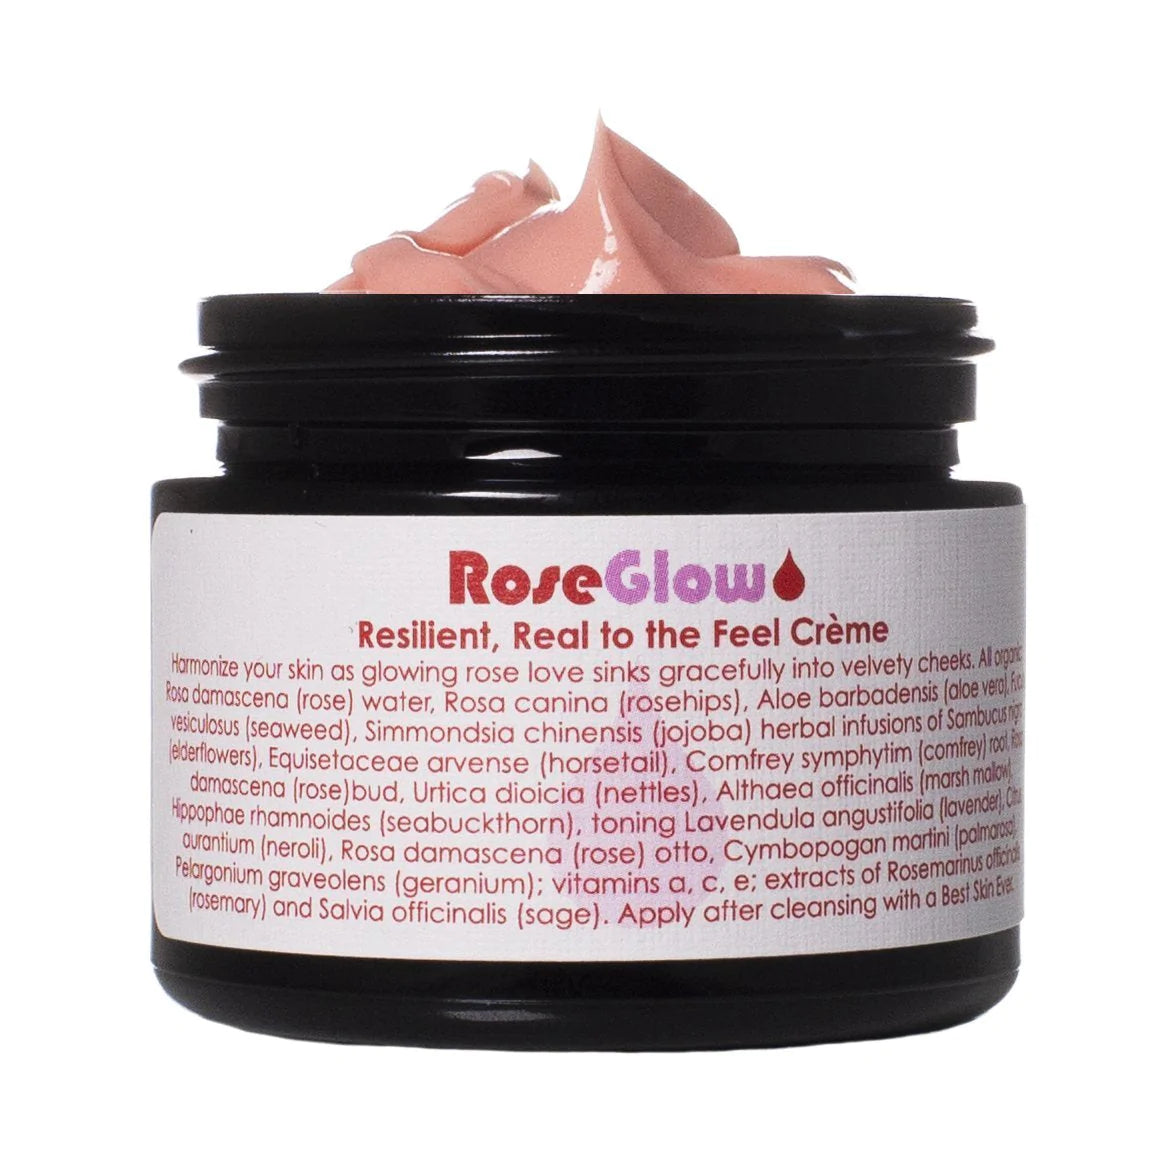 Living Libations - Rose Glow Face Crème (5ml, 15ml, 50ml)